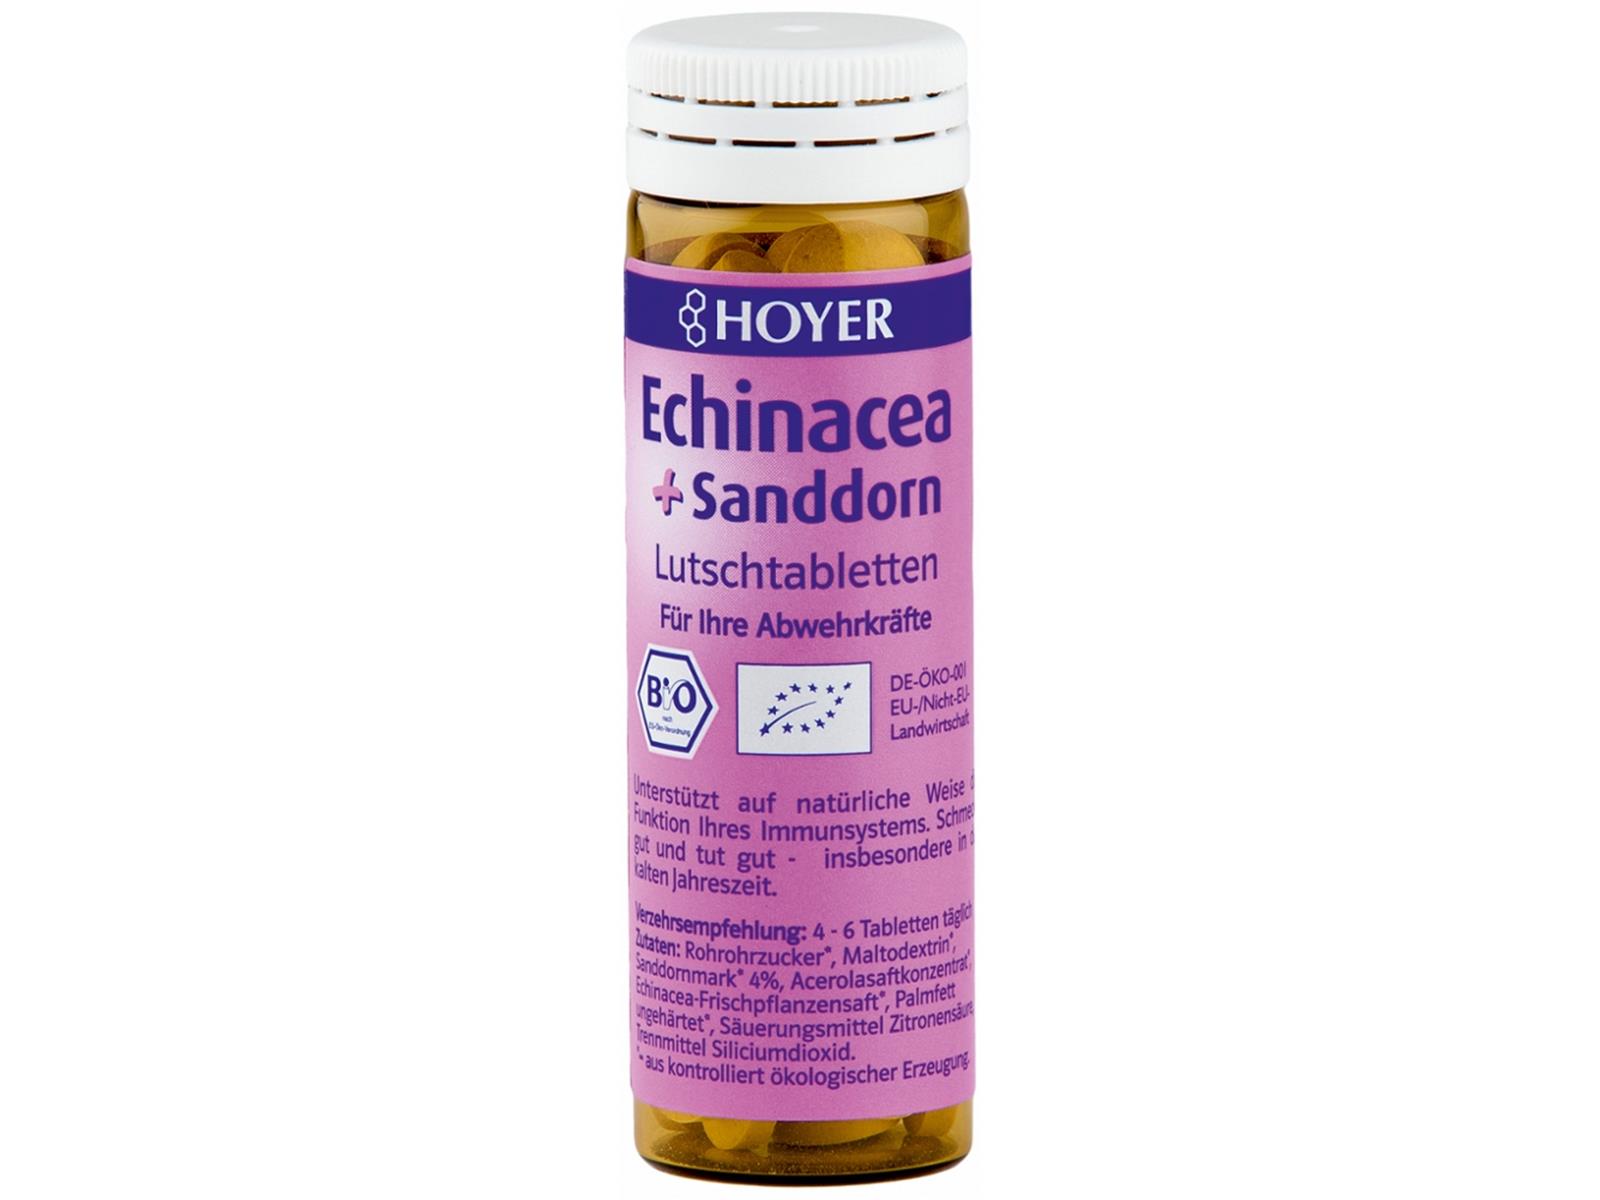 Hoyer Echinacea + Sanddorn Tabletten 60 Stück